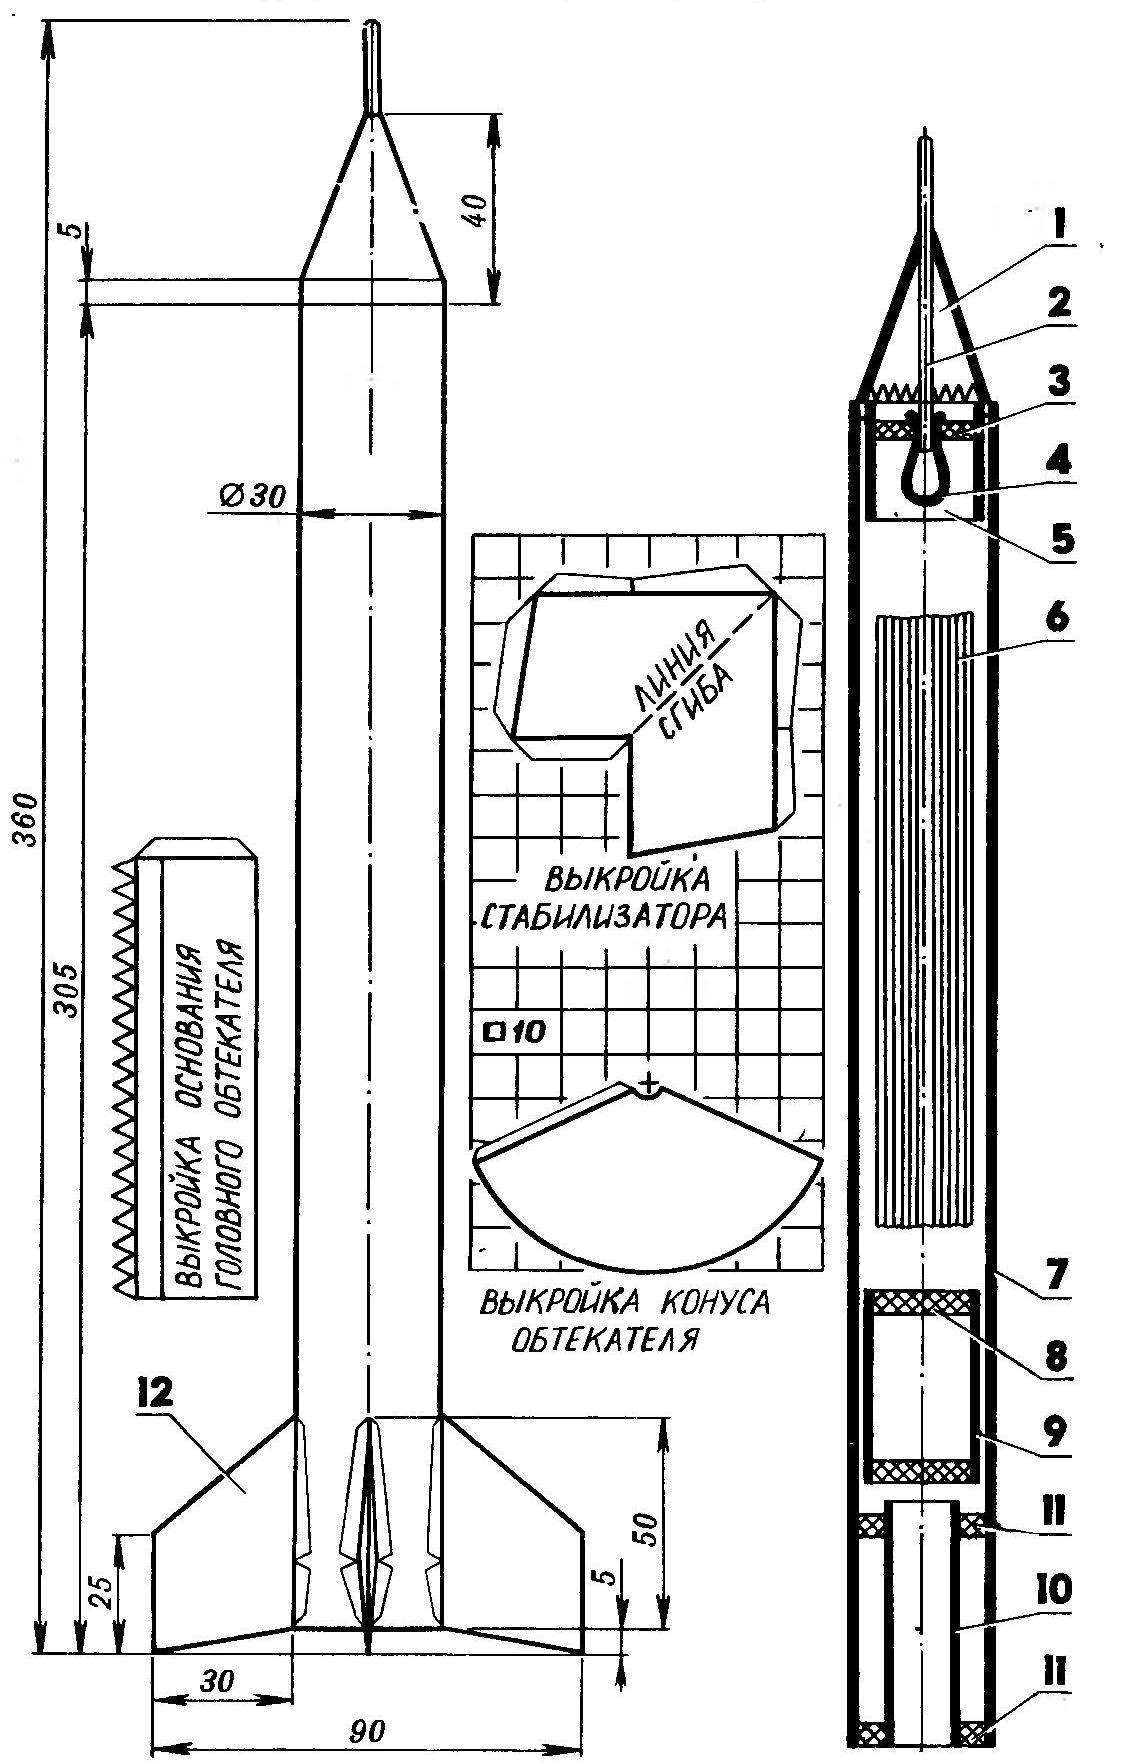 Fig. 1. Educational model rocket